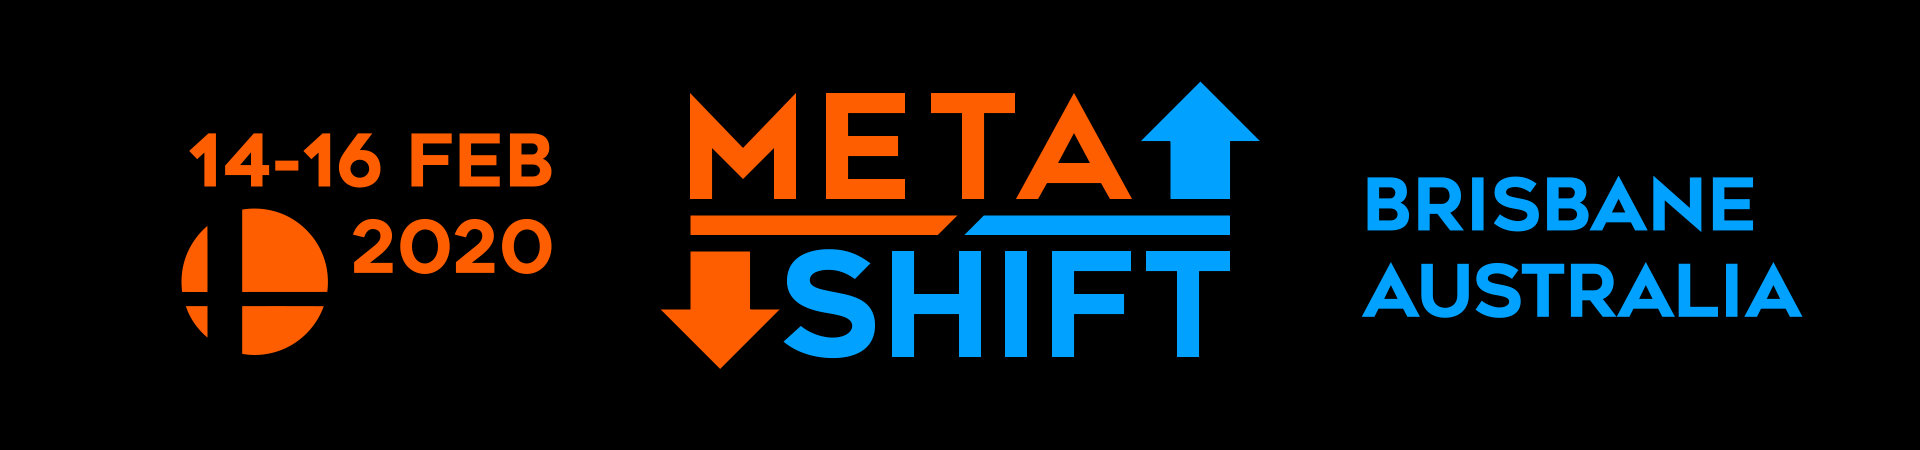 META SHIFT logo and banner